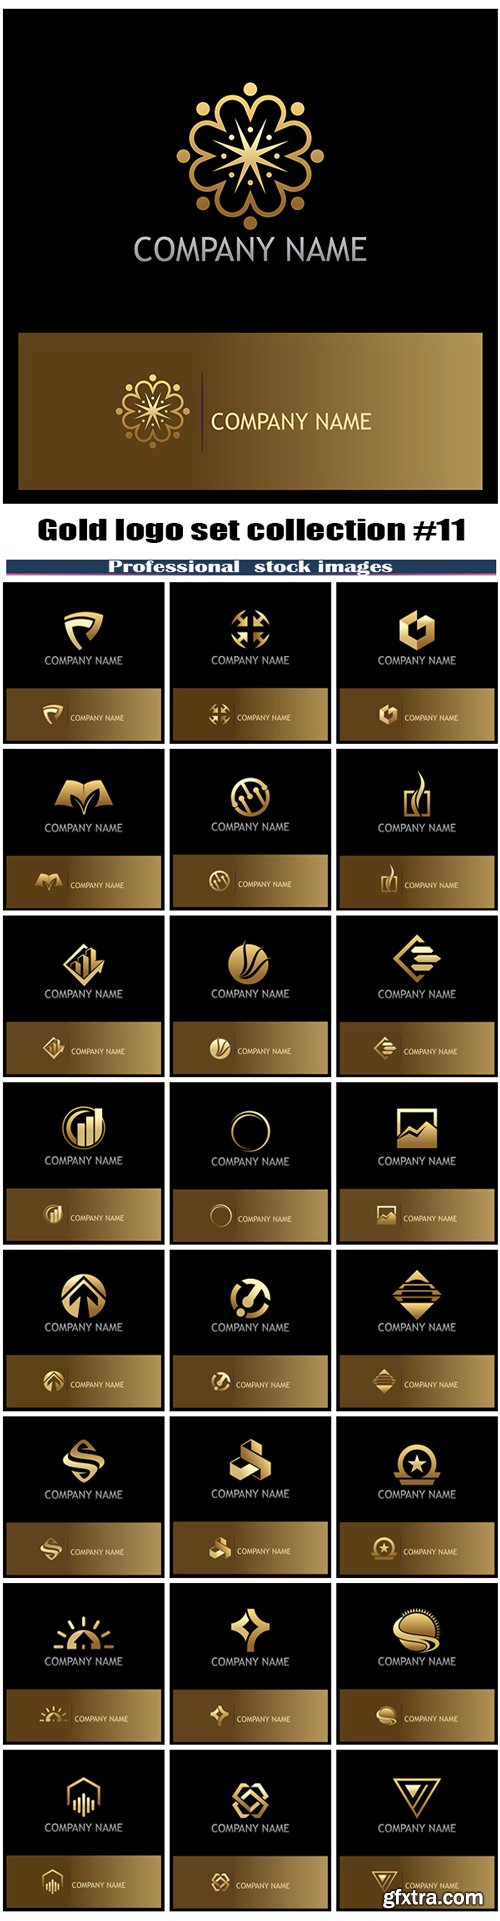 Gold logo set collection #11